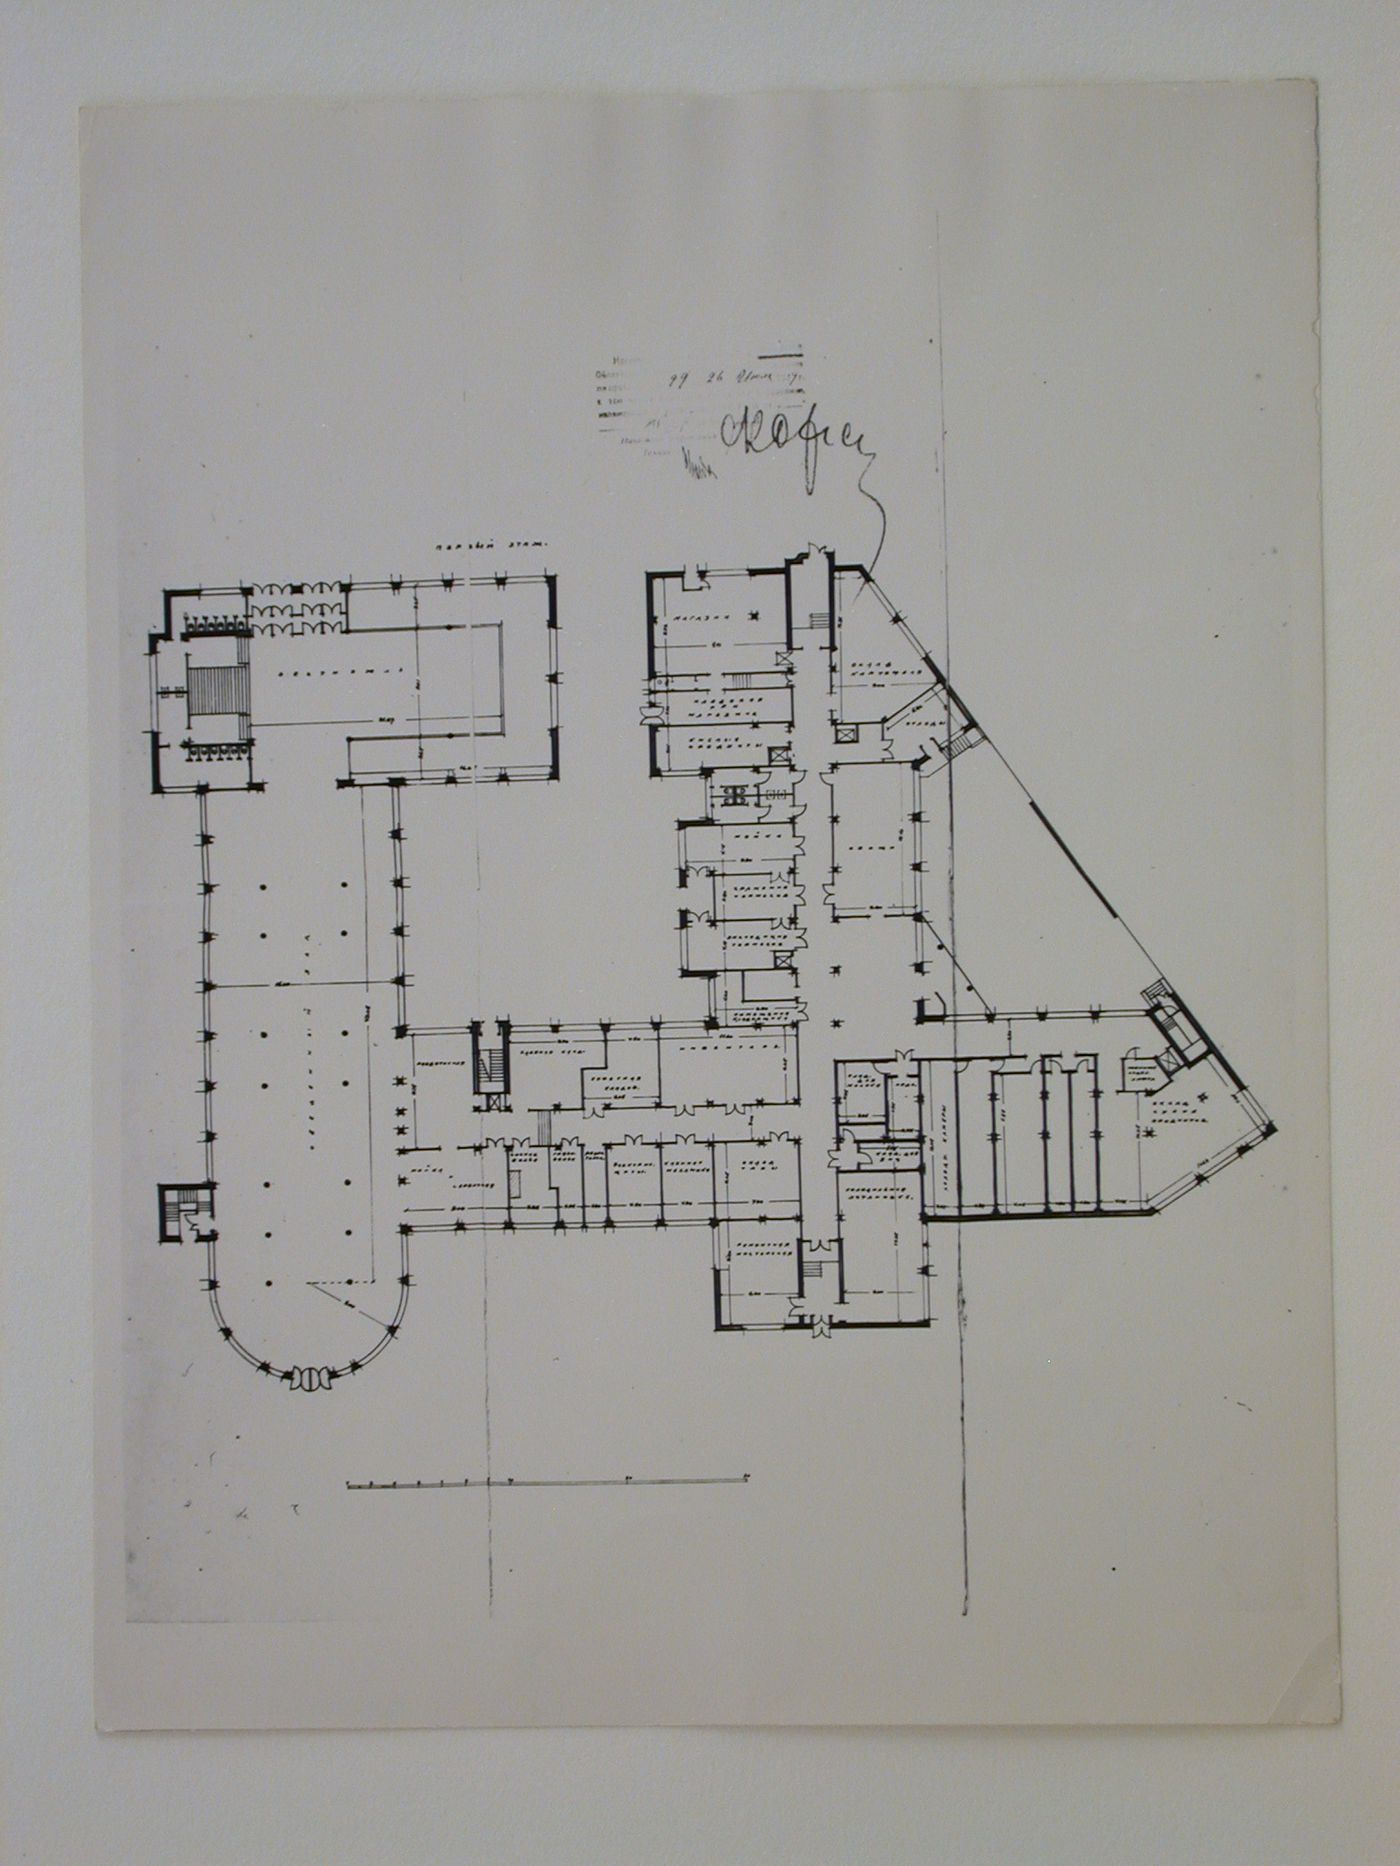 Photograph of a first floor plan for the Vasileostrovskaya Mechanized canteen, Leningrad (now Saint Petersburg)